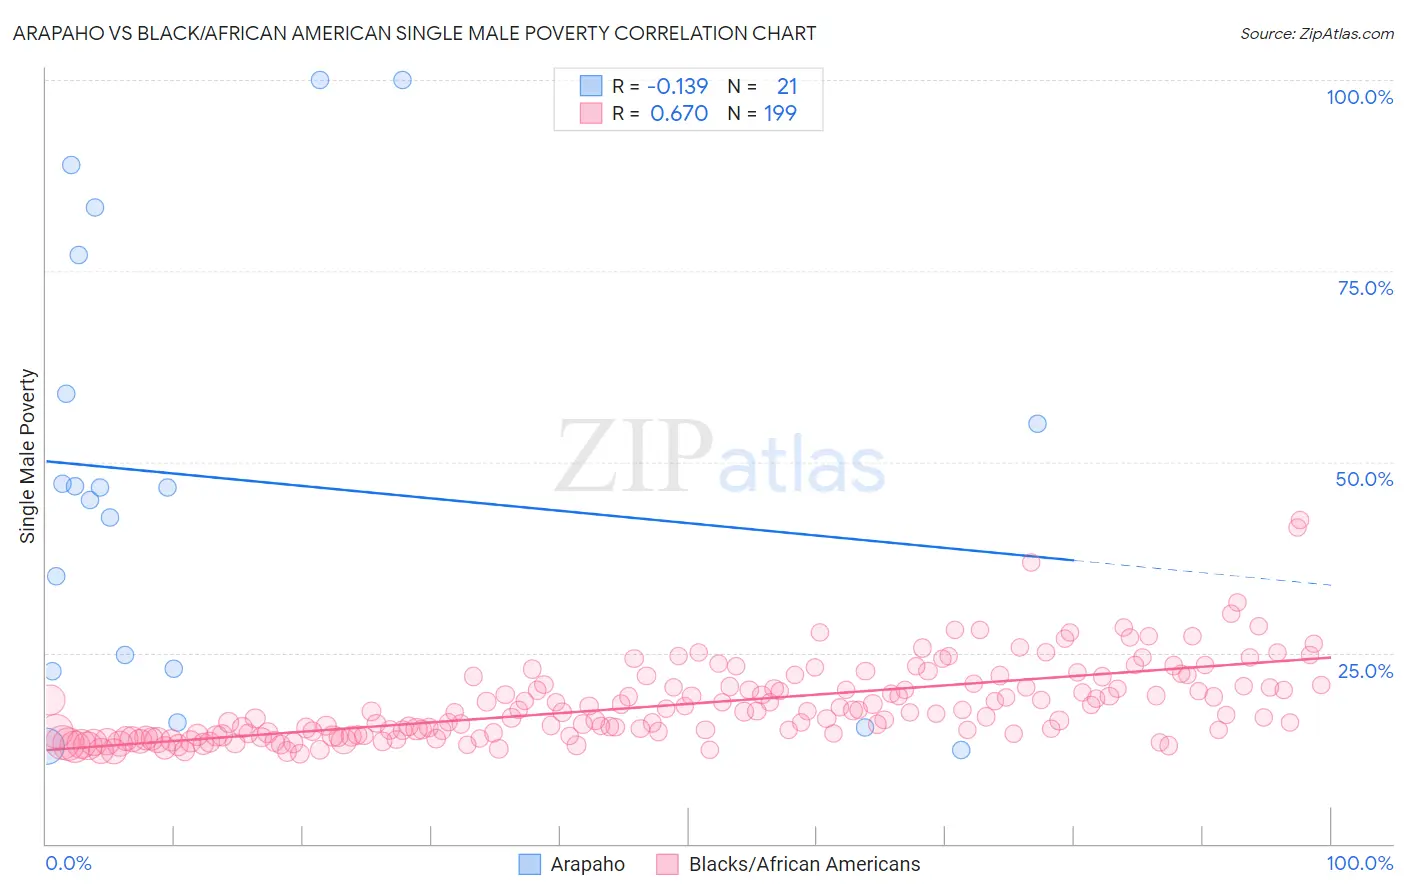 Arapaho vs Black/African American Single Male Poverty